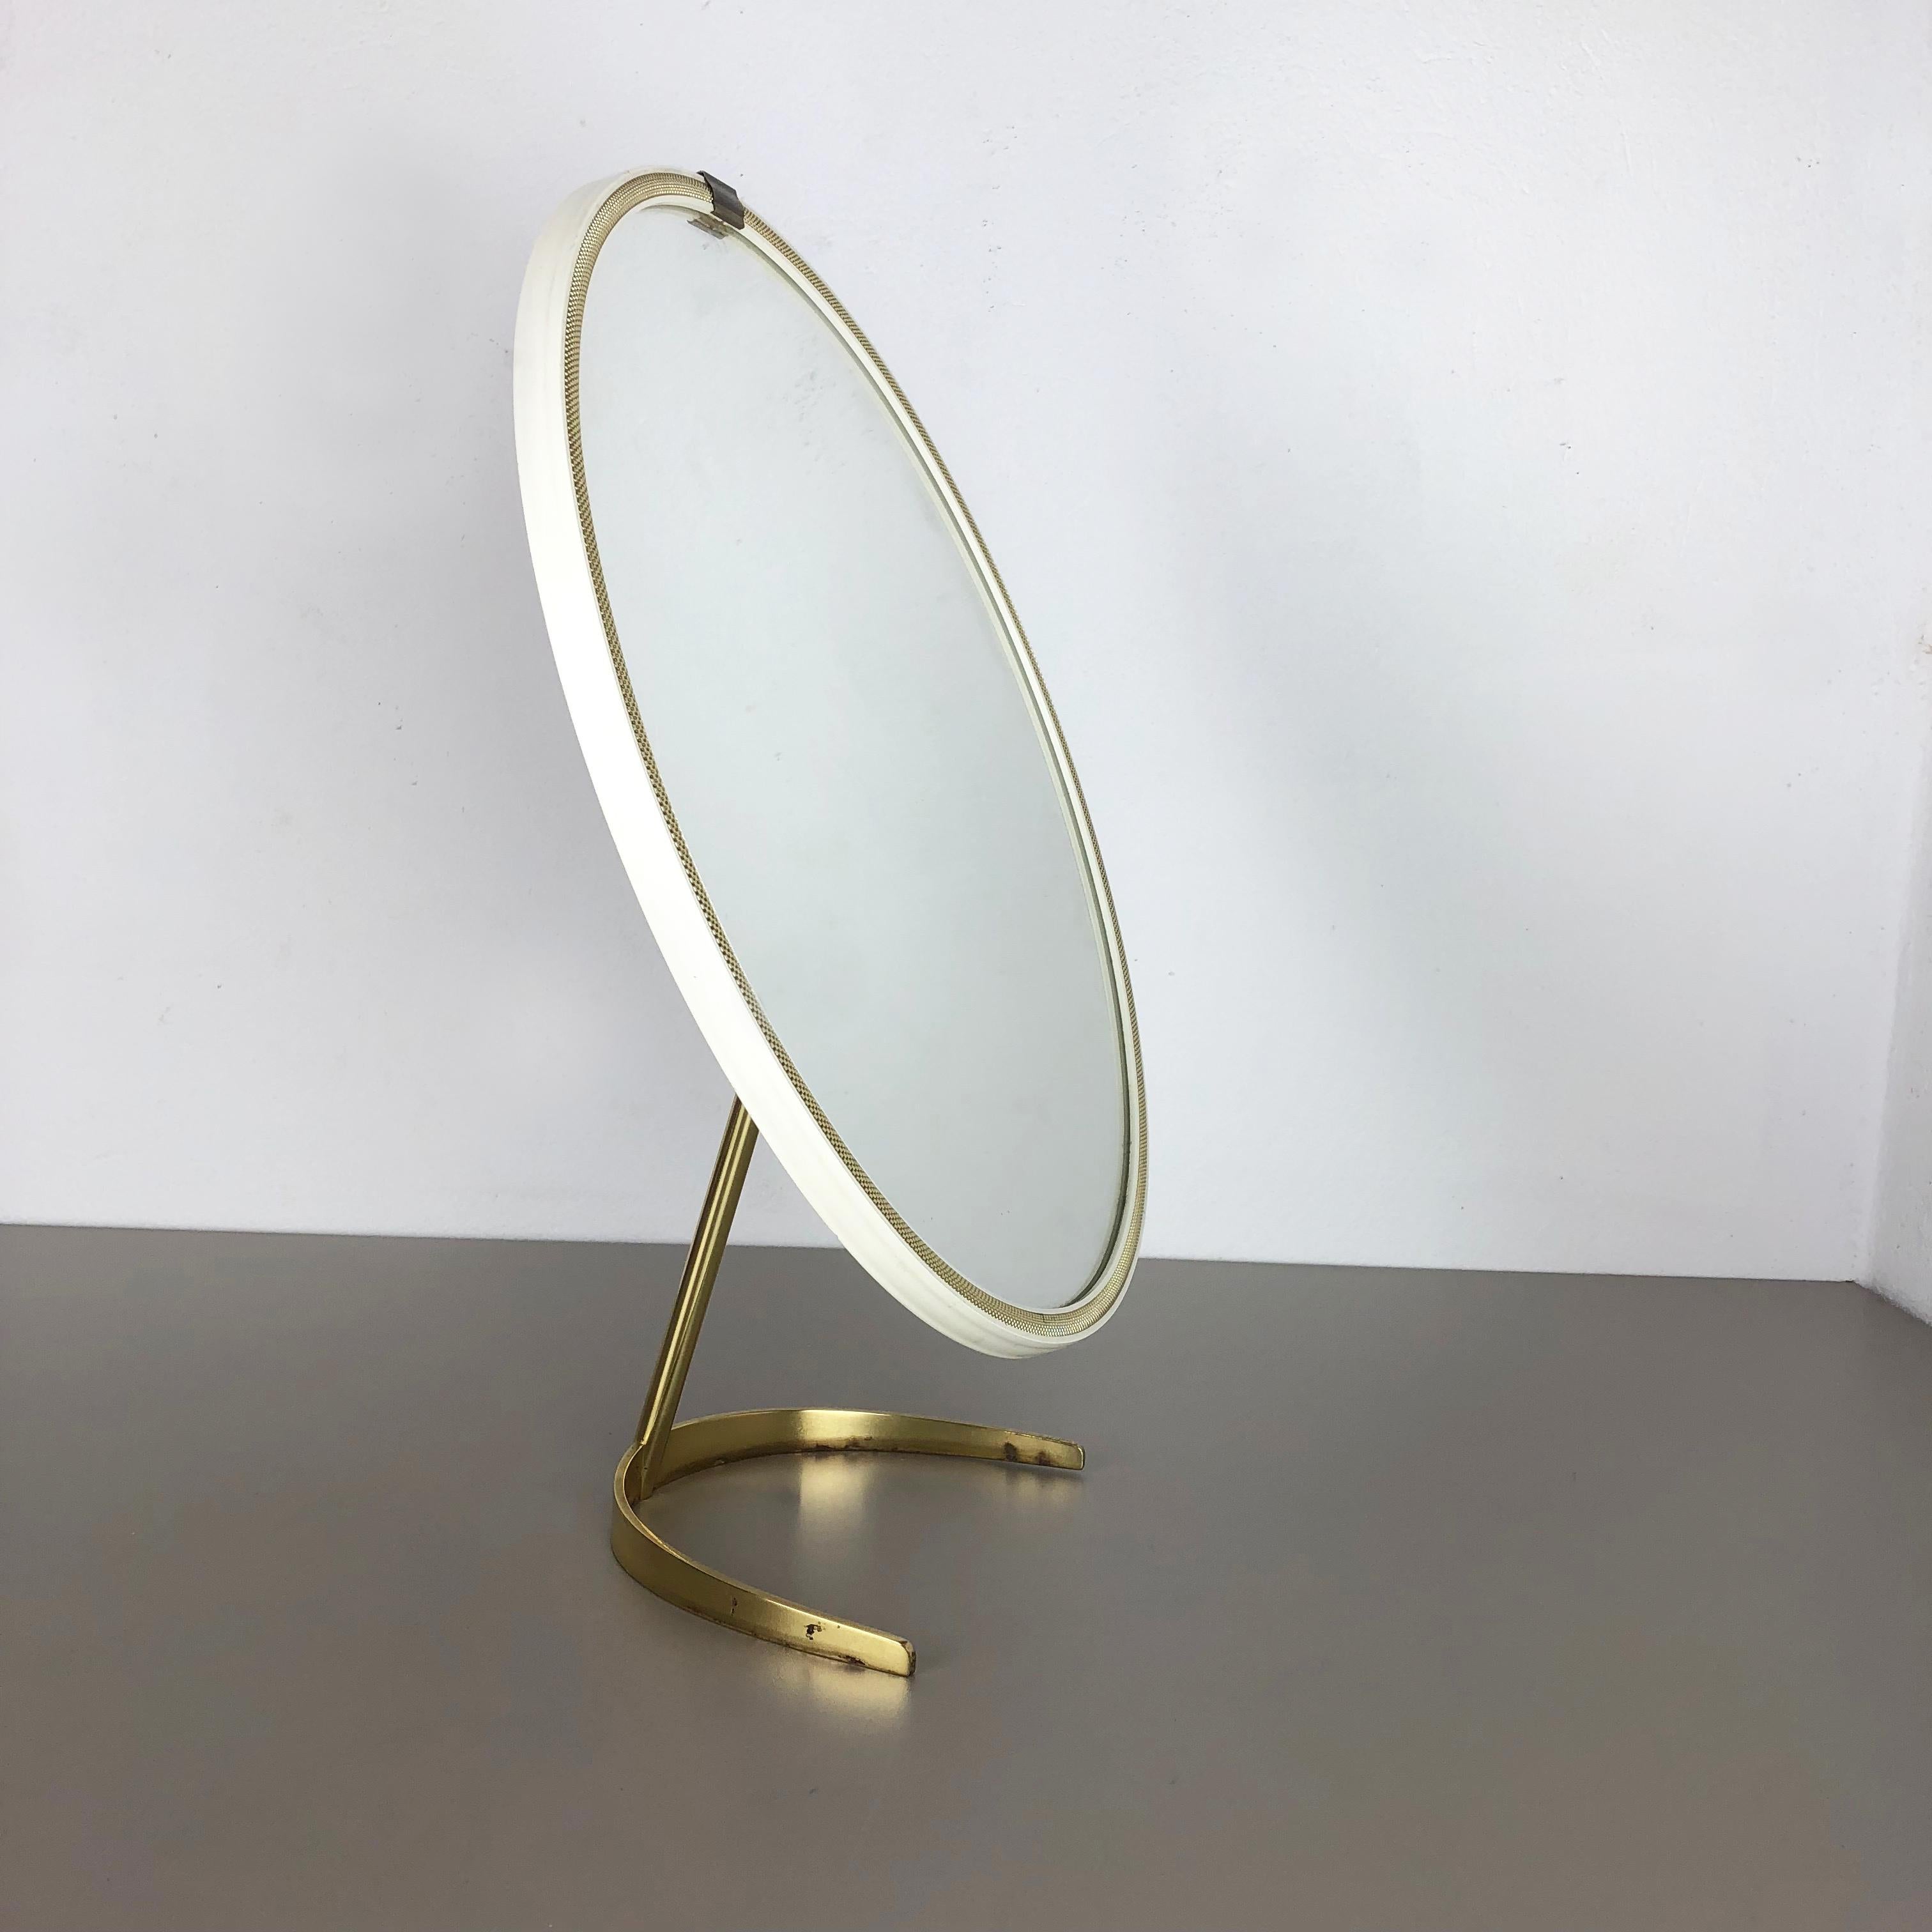 Article:

Table mirror


Producer:

Vereinigte Werkstätten München attrib.


Origin:

Germany


Material:

Wood, glass, metal


Decade:

1950s


Description:

This original midcentury table mirror was produced in the 1950s